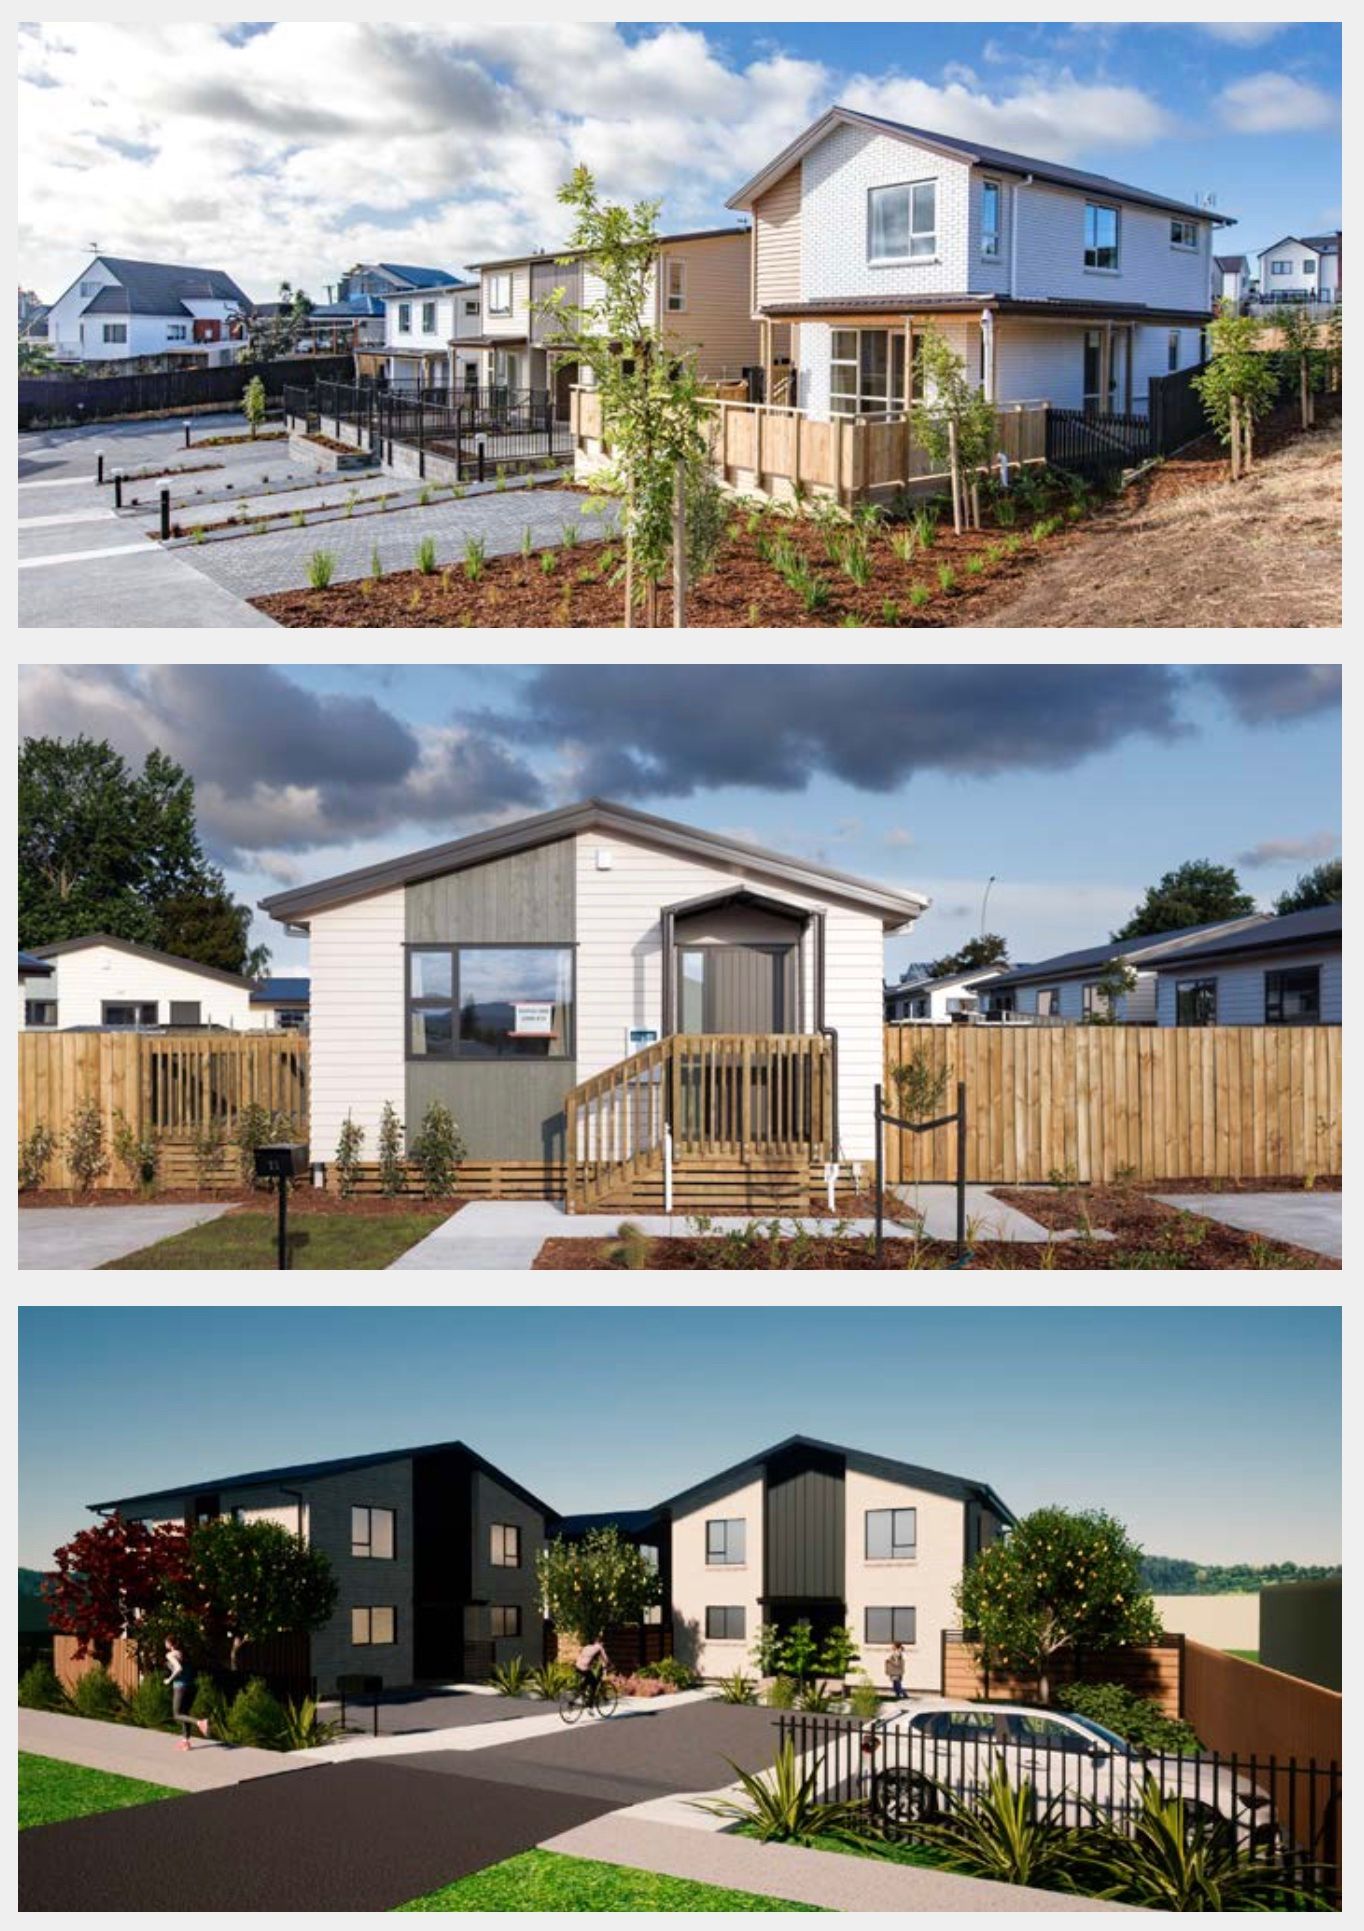 Kāinga Ora new homes planned in Richmond and Motueka